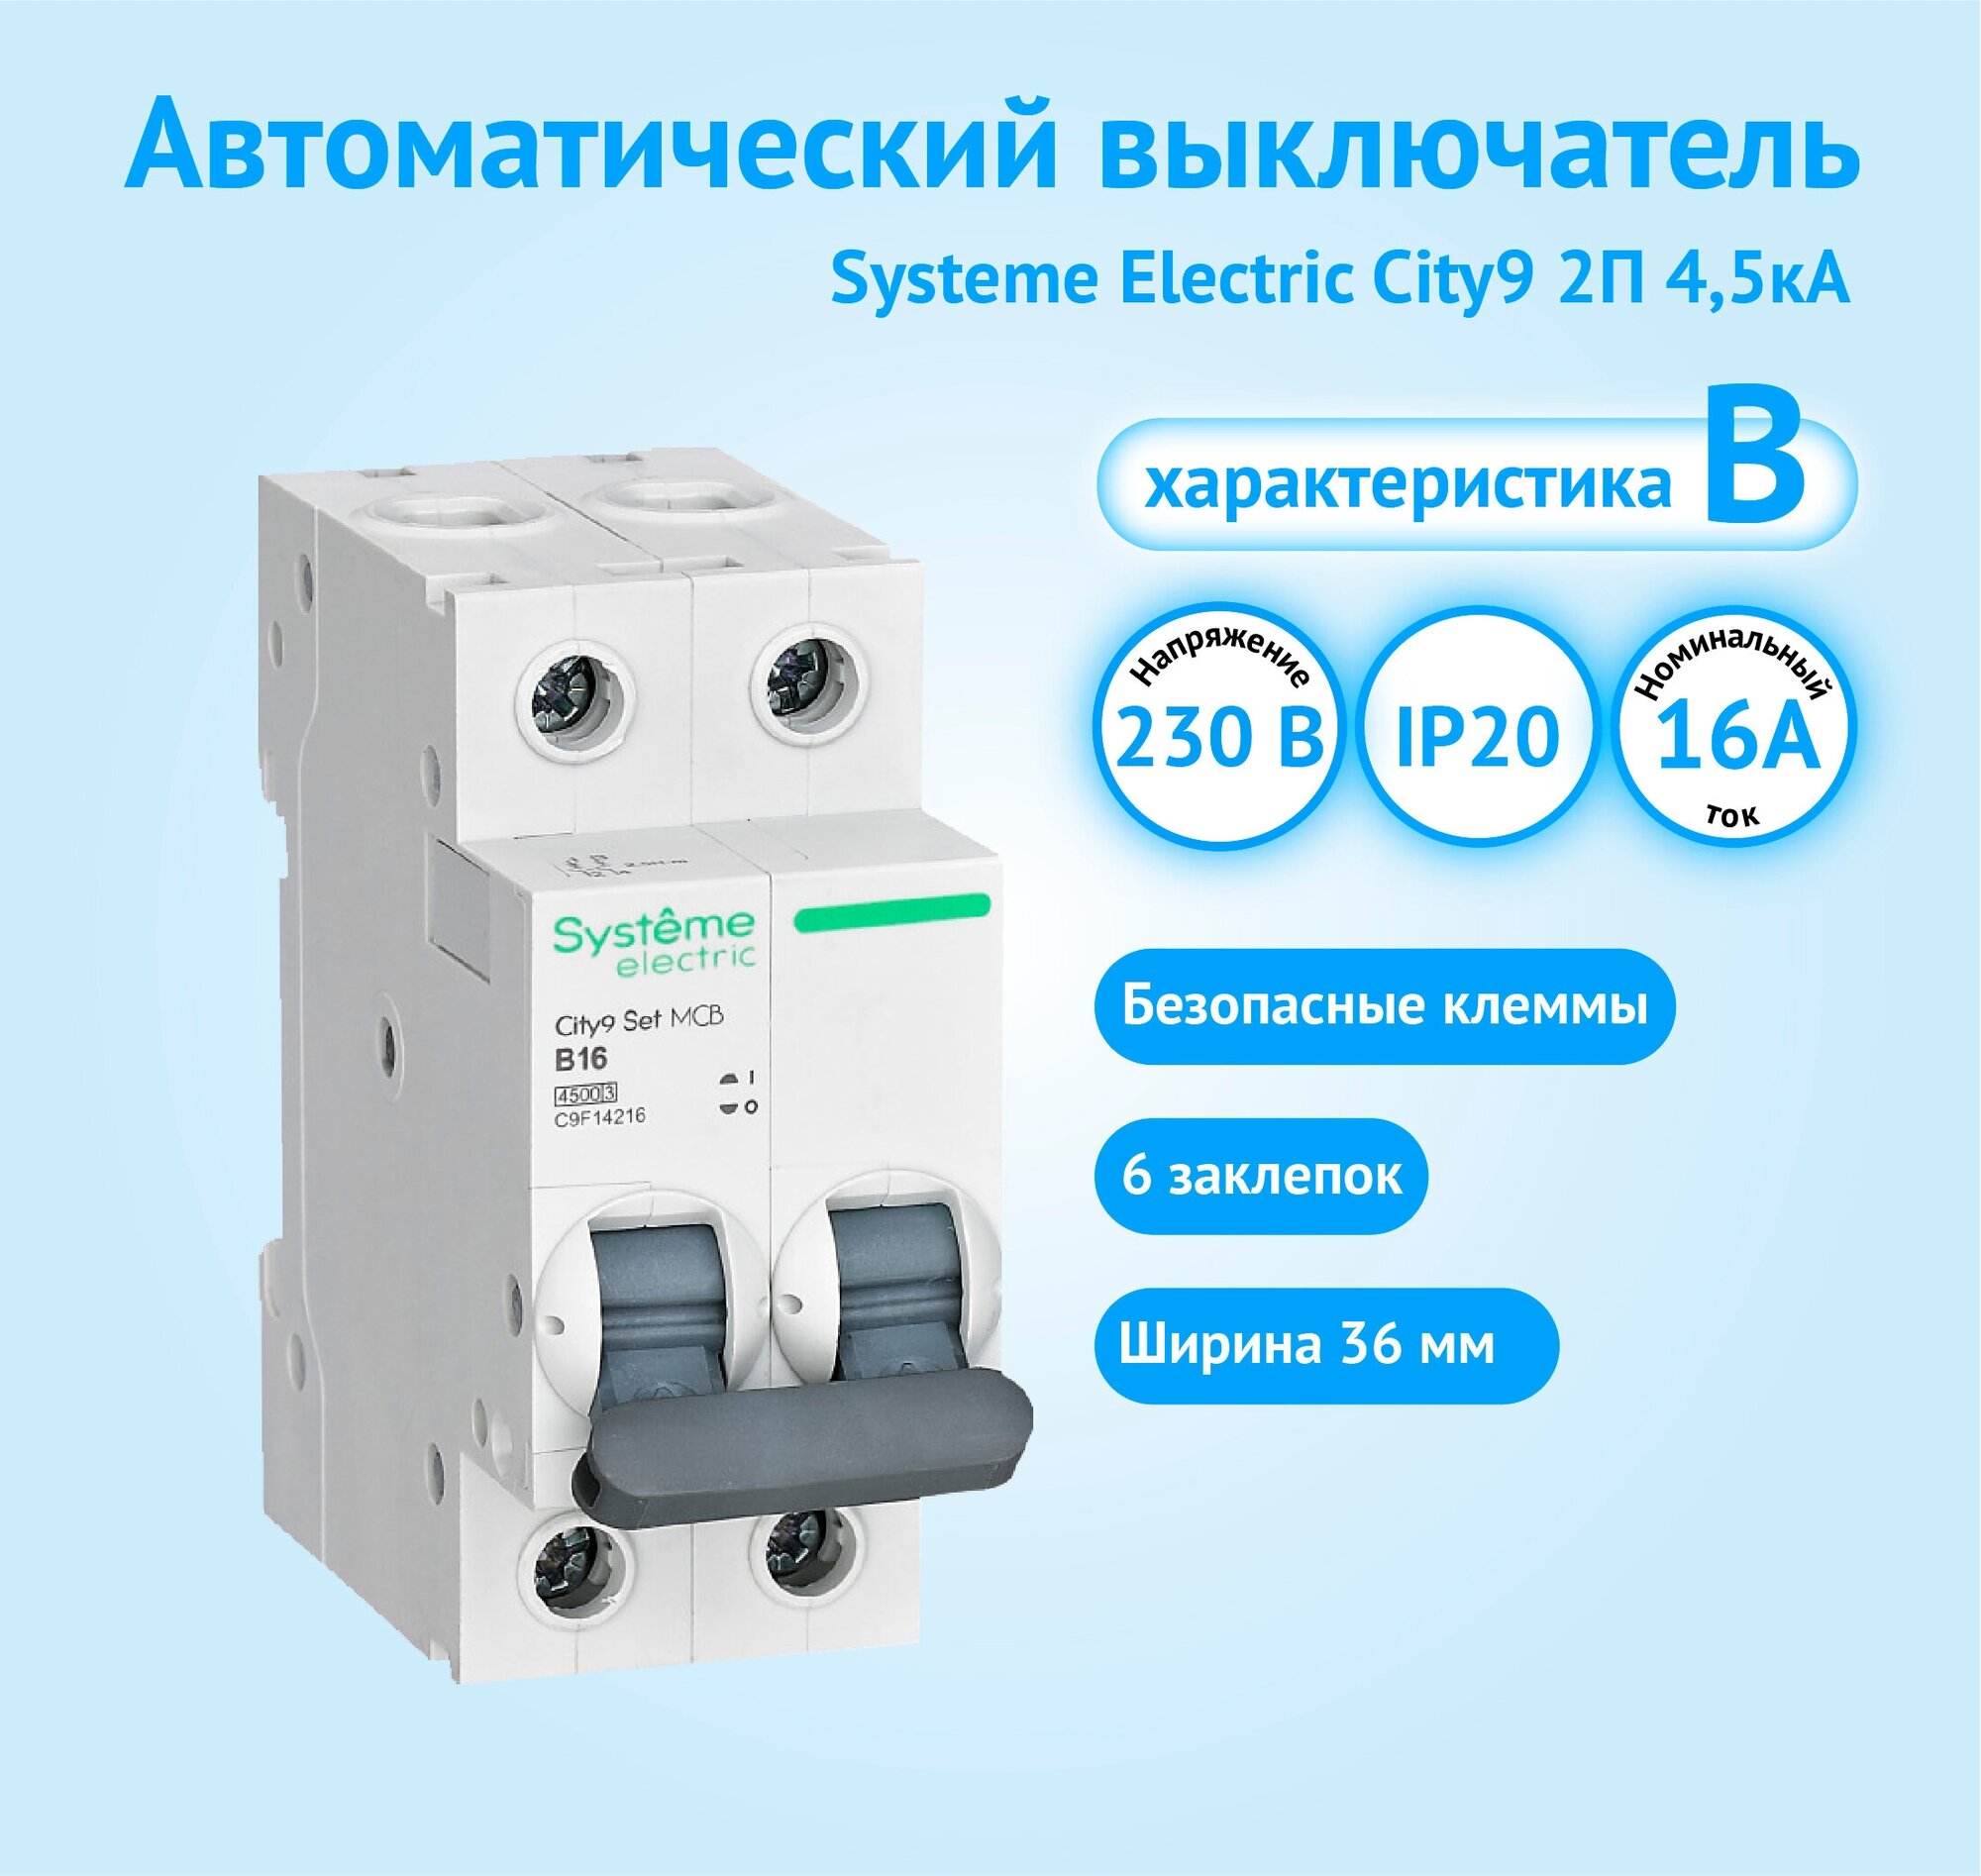 Автоматический выключатель Systeme Electric City9 2P 16А характеристика B